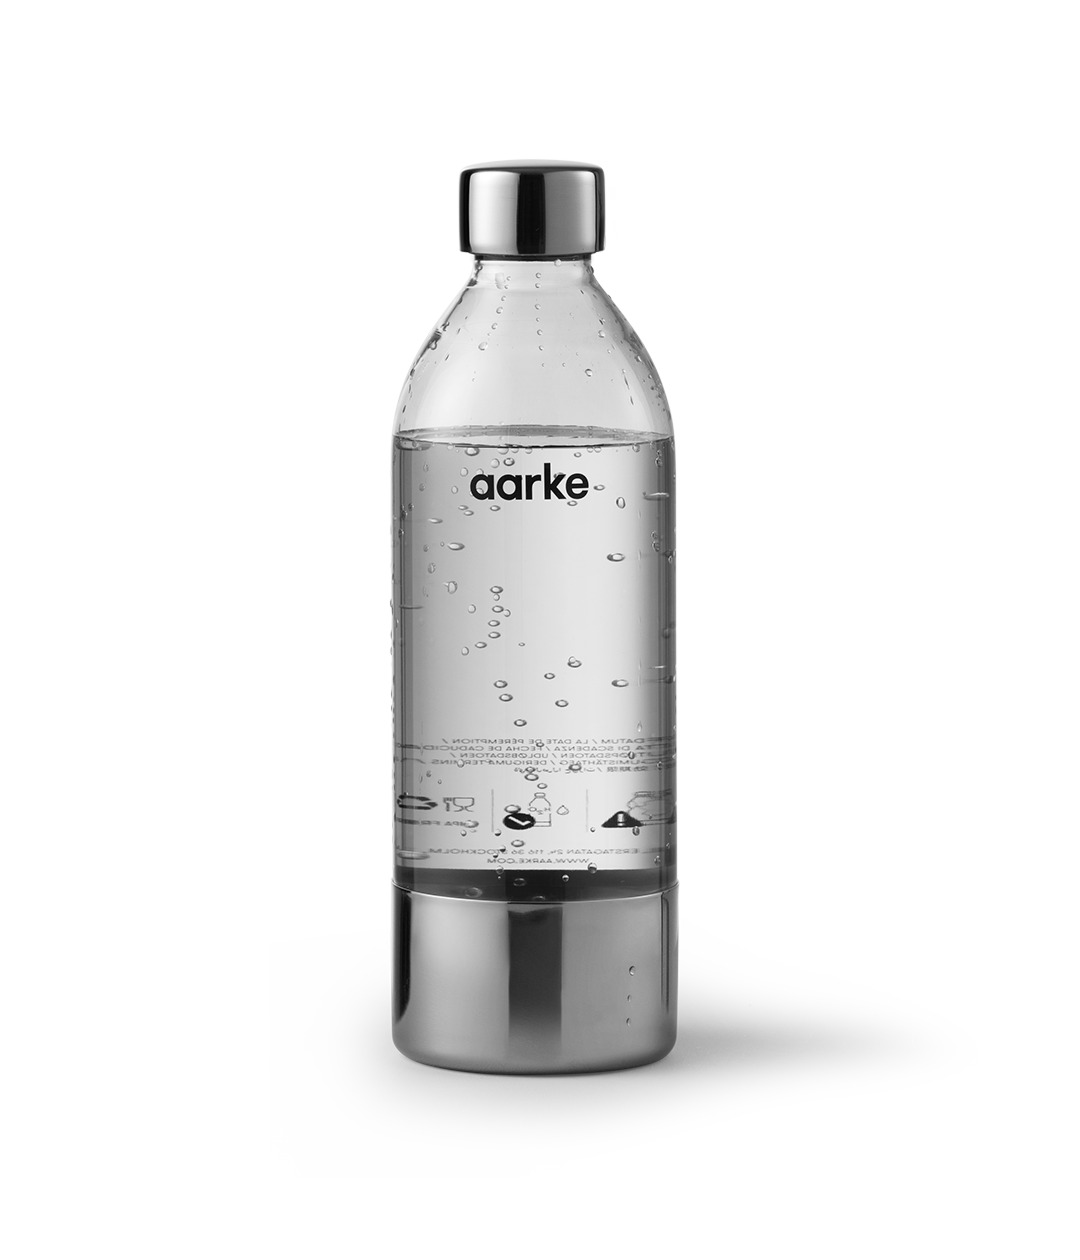 AARKE Carbonator 本体専用ペットボトル クリア／スチールシルバー 最大容量800ml